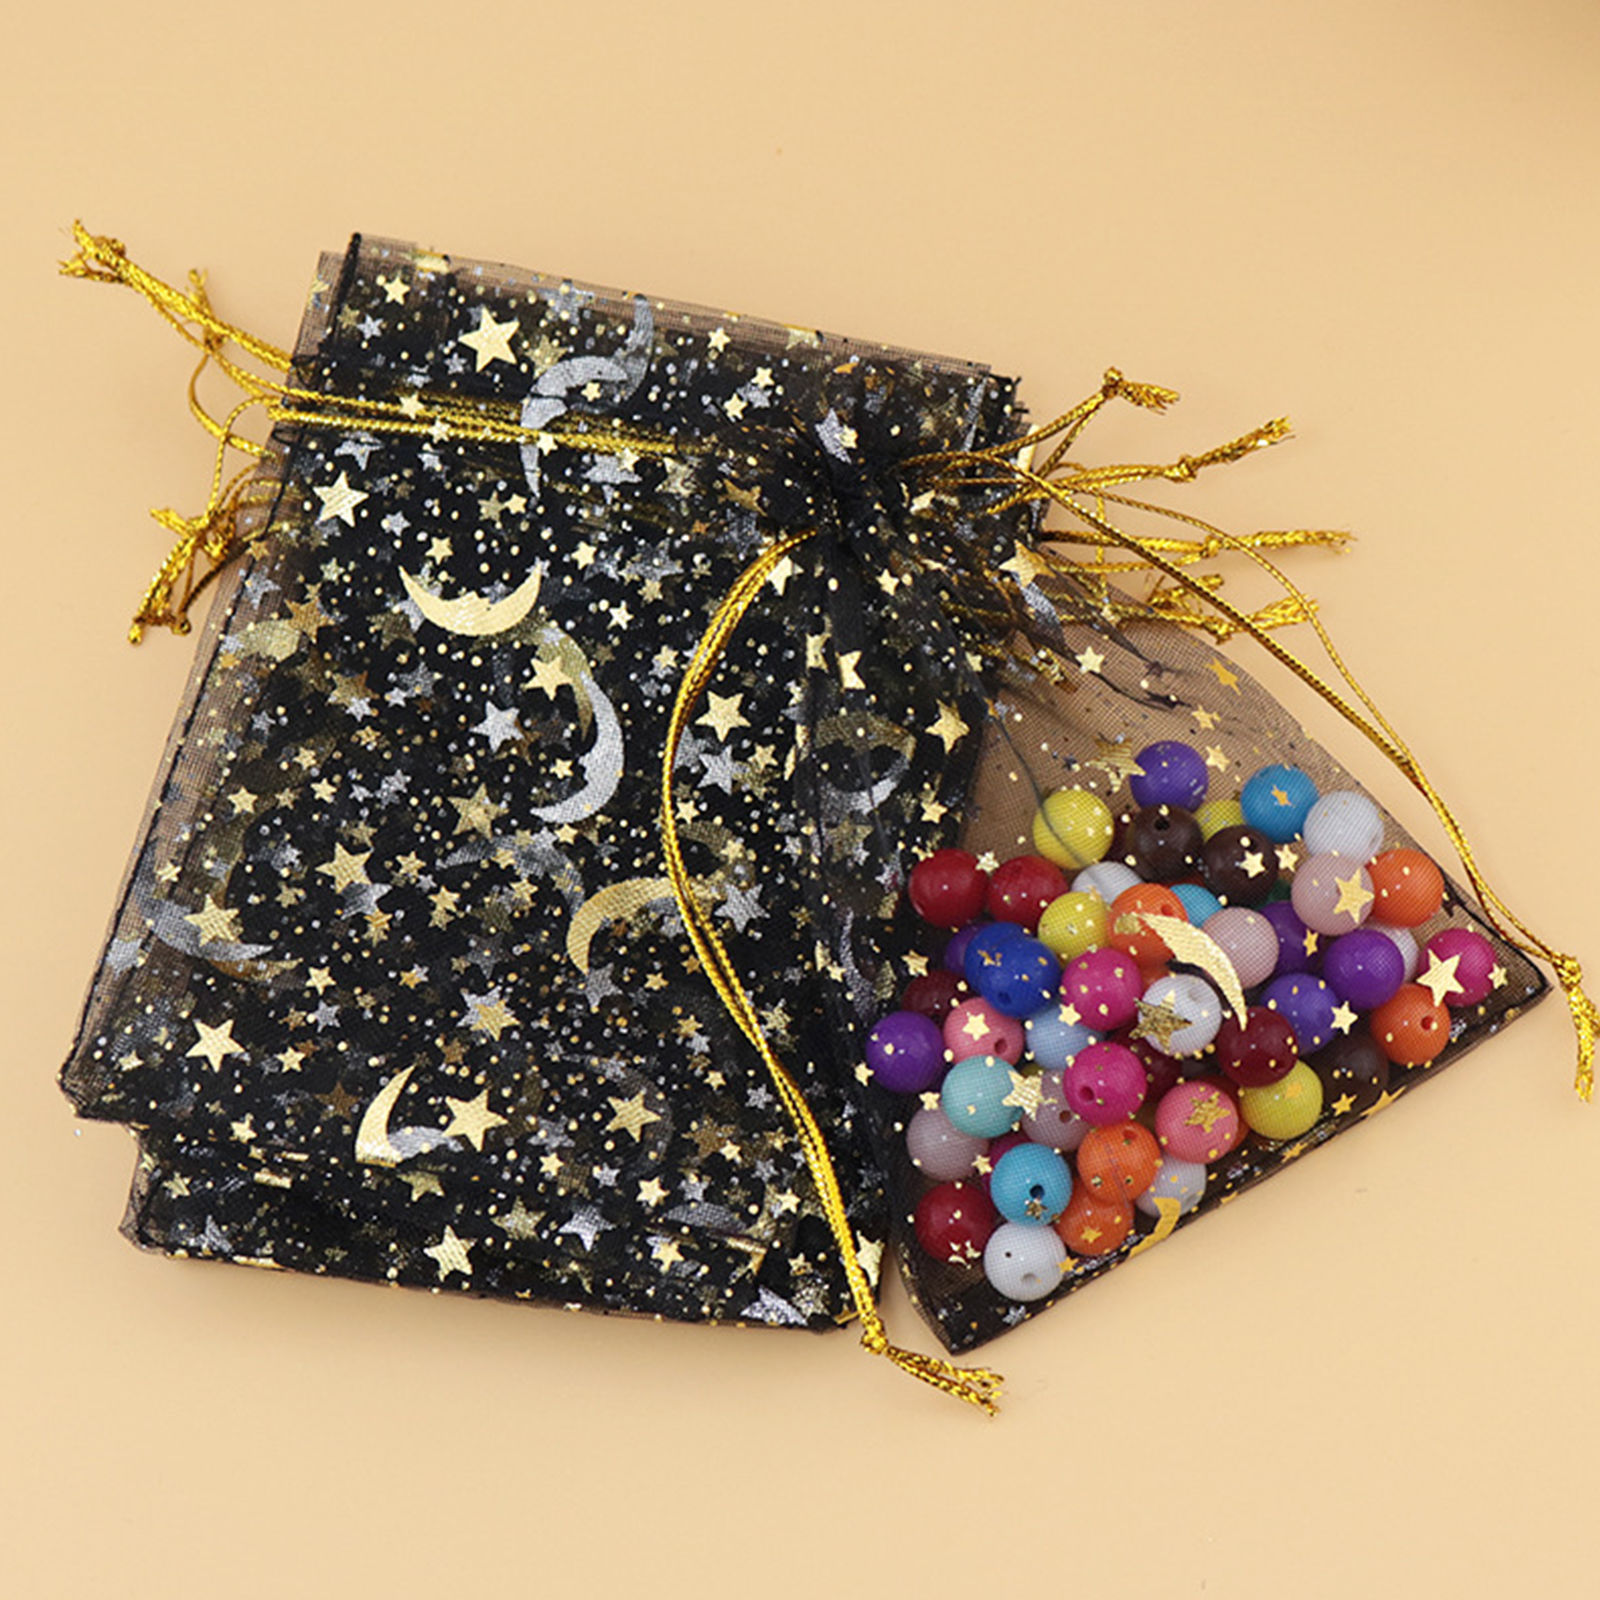 Picture of Wedding Gift Organza Galaxy Drawstring Bags Half Moon Black Star 12cm x9cm(4 6/8" x3 4/8"), 20 PCs